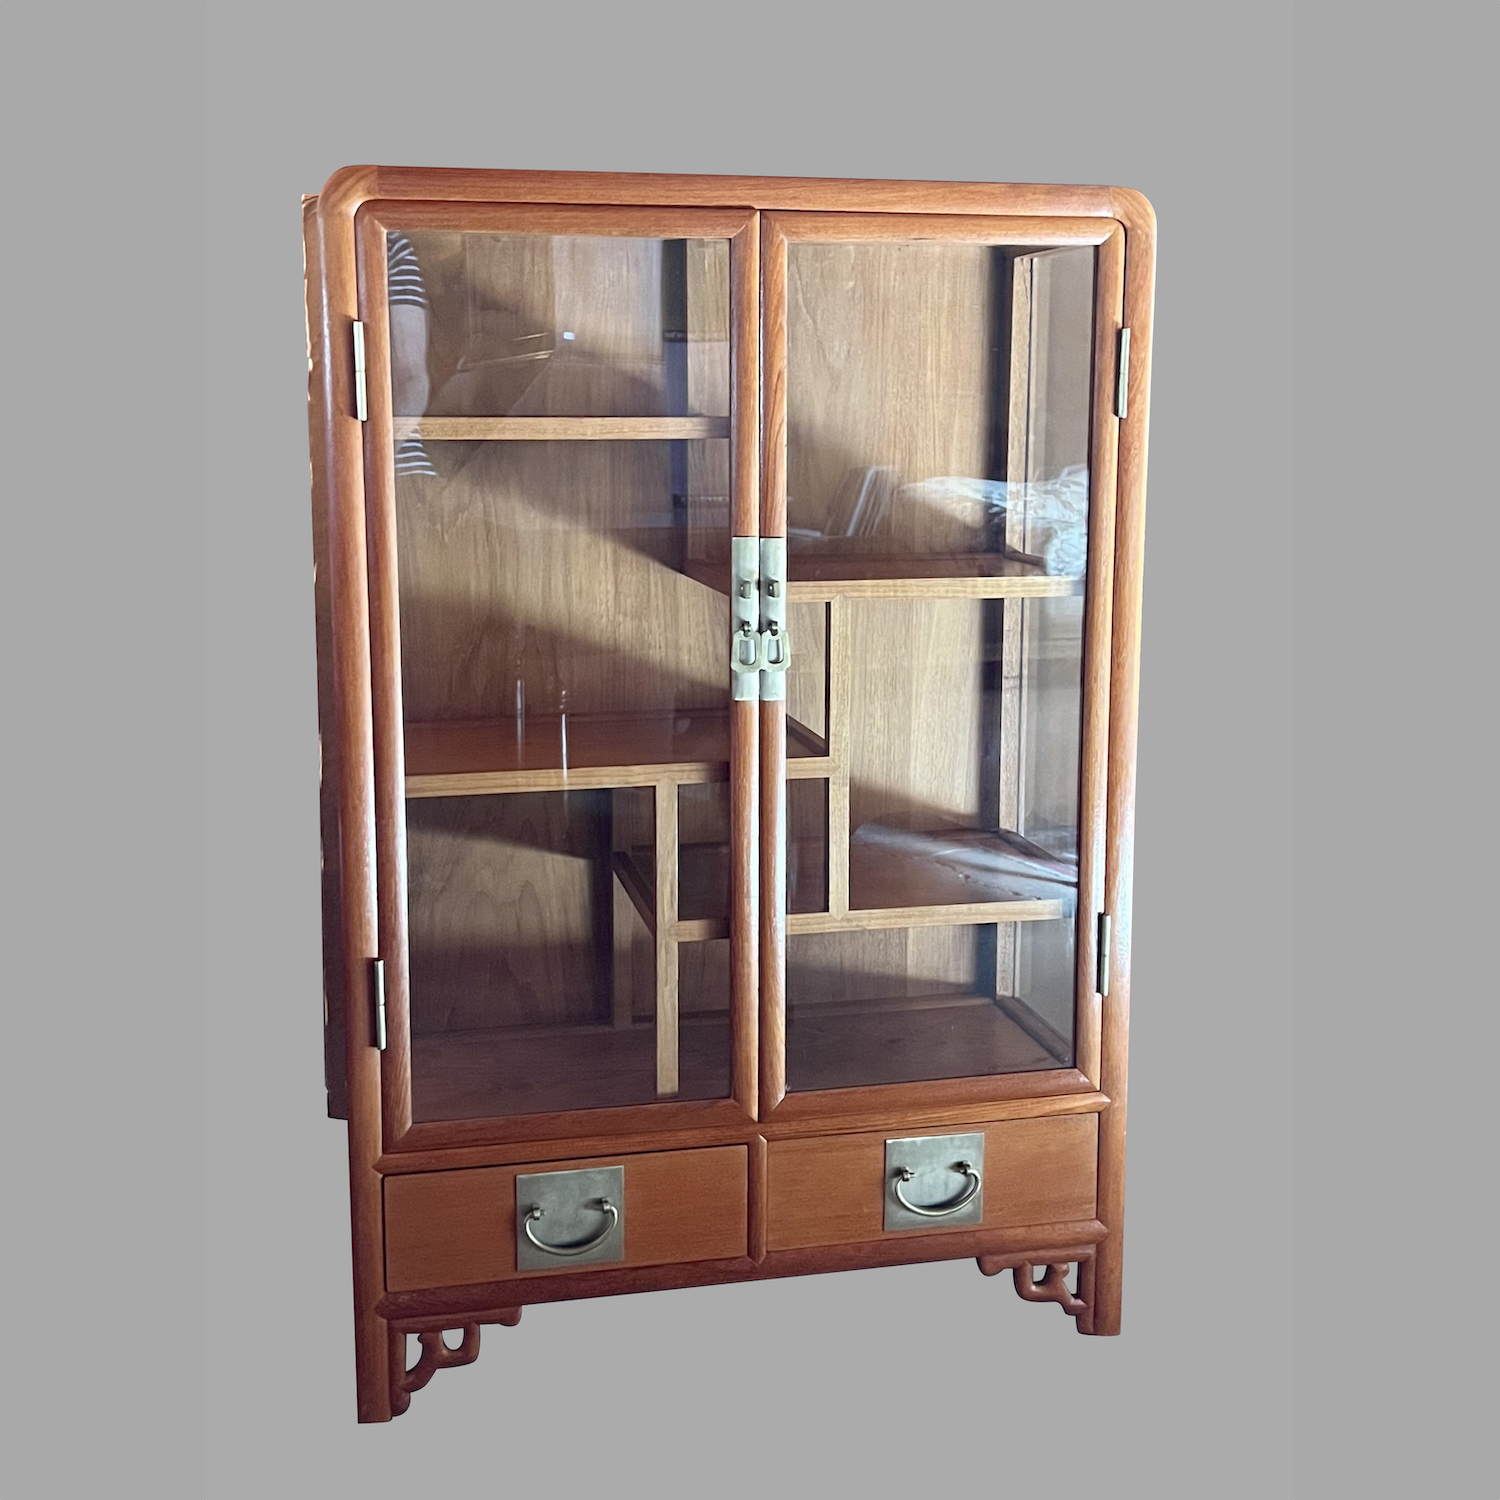 chinese-mid-century-teak-glazed-double-door-display-case-with-2-drawers-c723-36